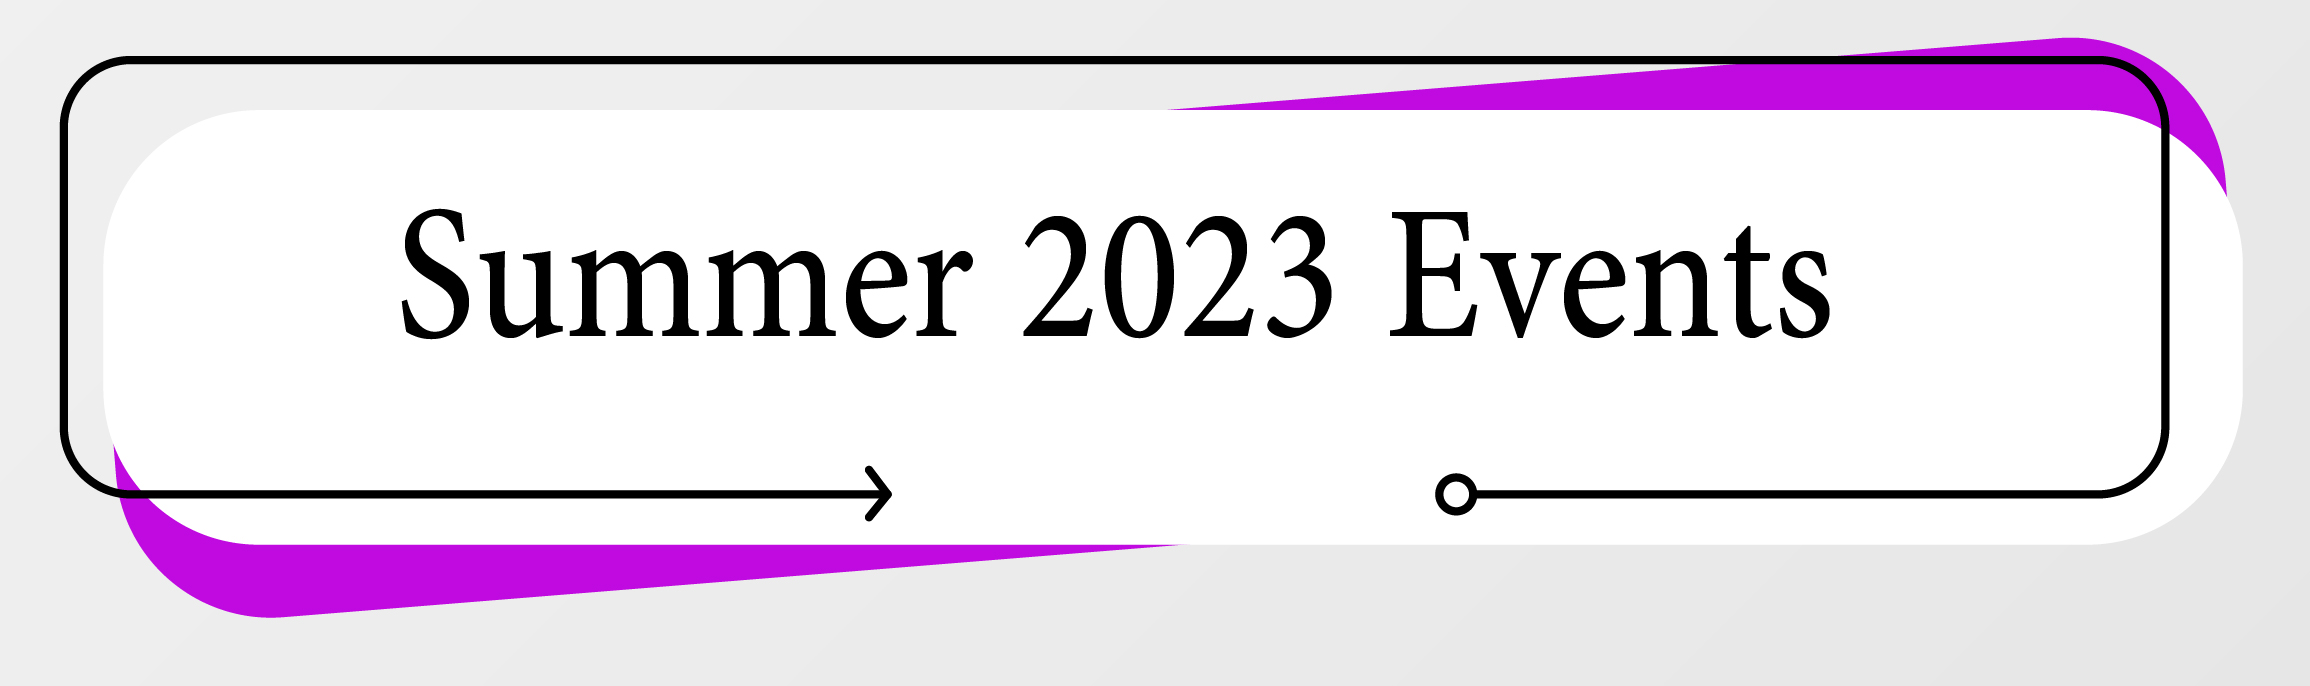 Summer 2023 Events_Mesa de trabajo 1